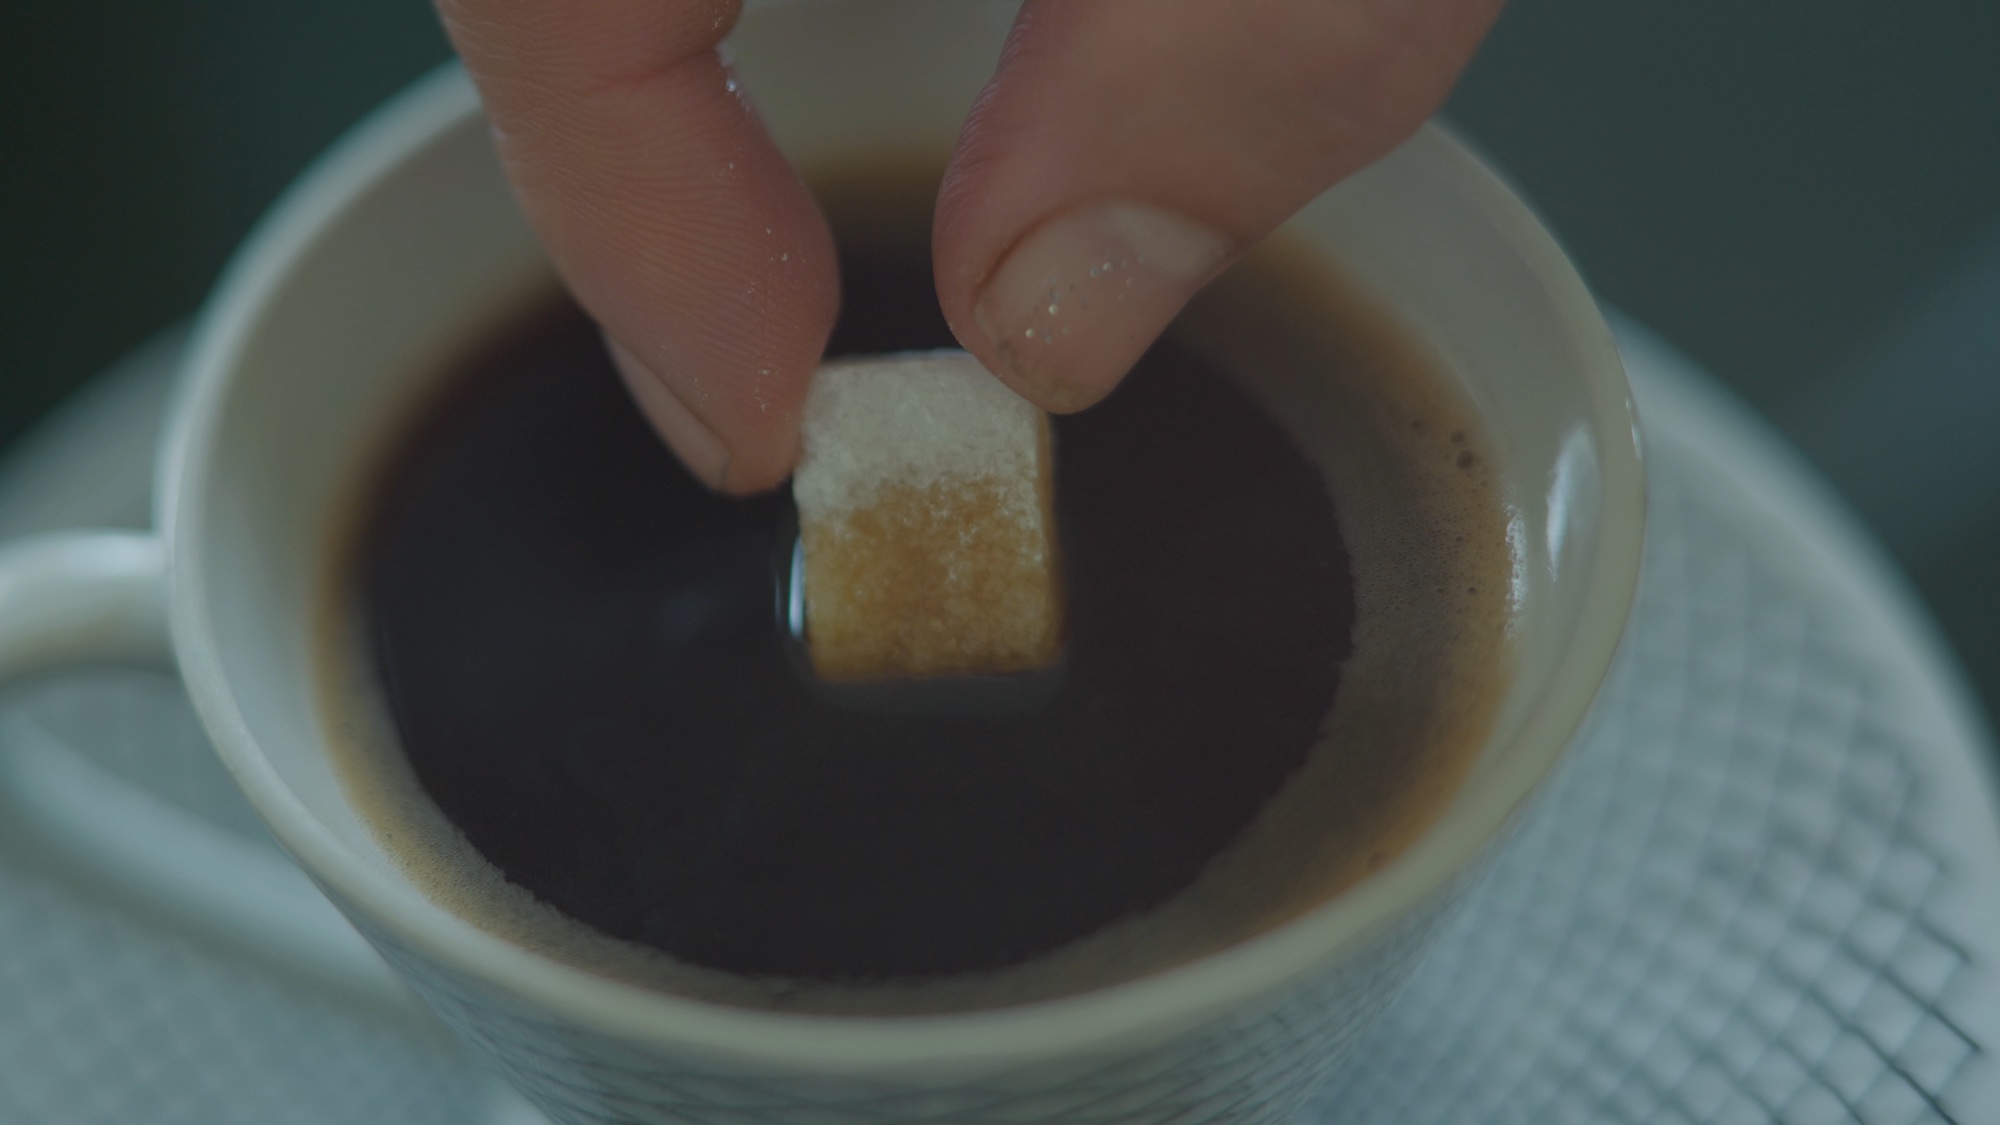 View of hand pinching a sugar cube, dipping it into a coffee mug containing a dark liquid